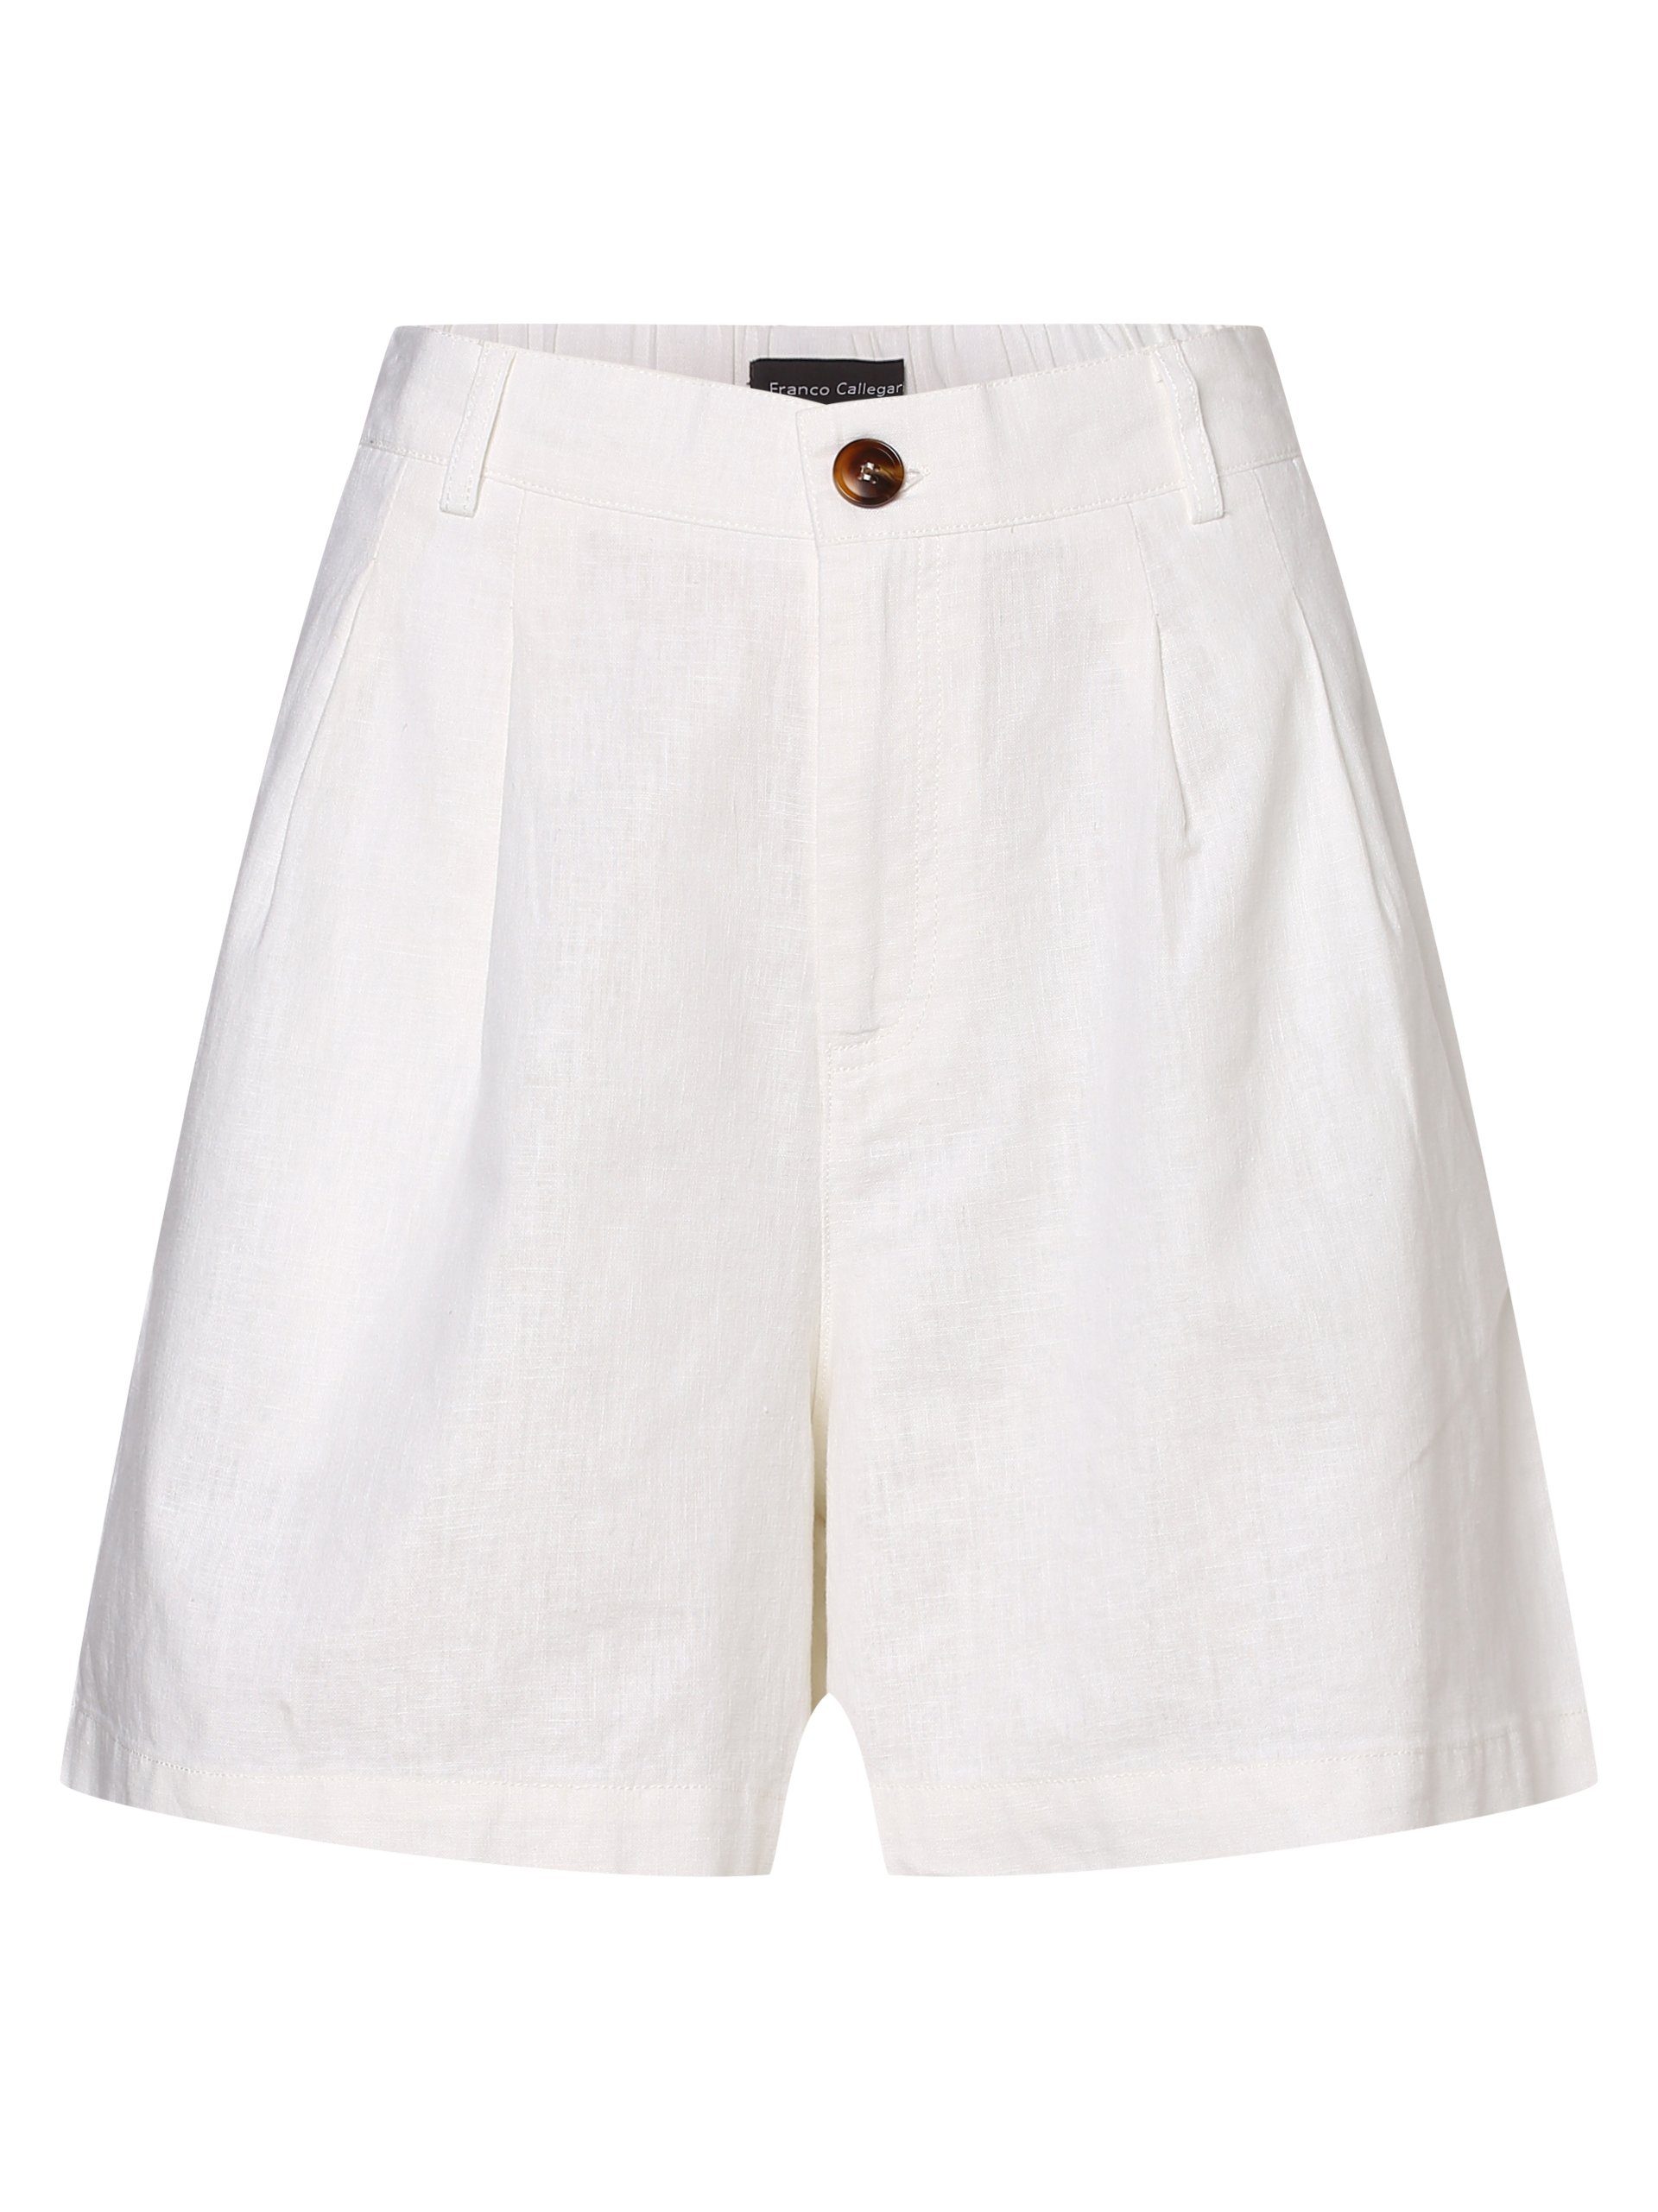 Franco Callegari weiß Shorts